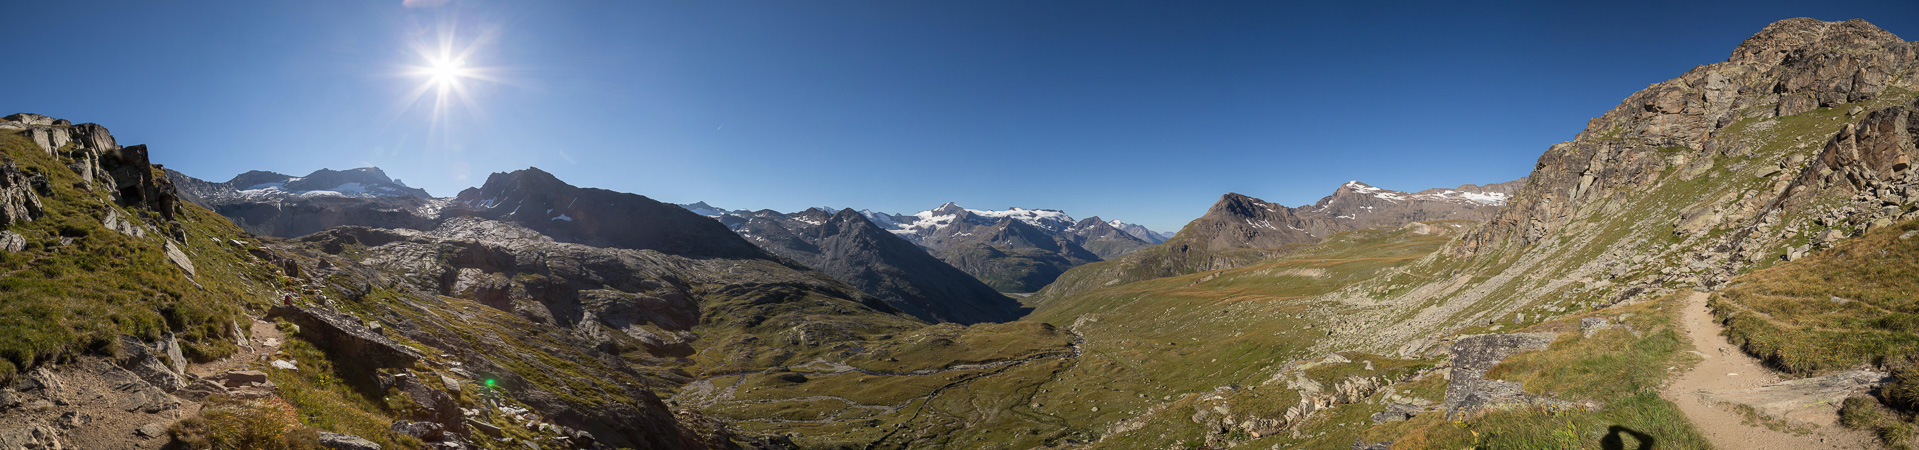 Links das Gipfelziel, Levanna Occidentale (3.593 m), dann Ouille des Pariotes (3.123 m), L'Albaron (3.640 m) und Pointe de Ronce (3.612 m).